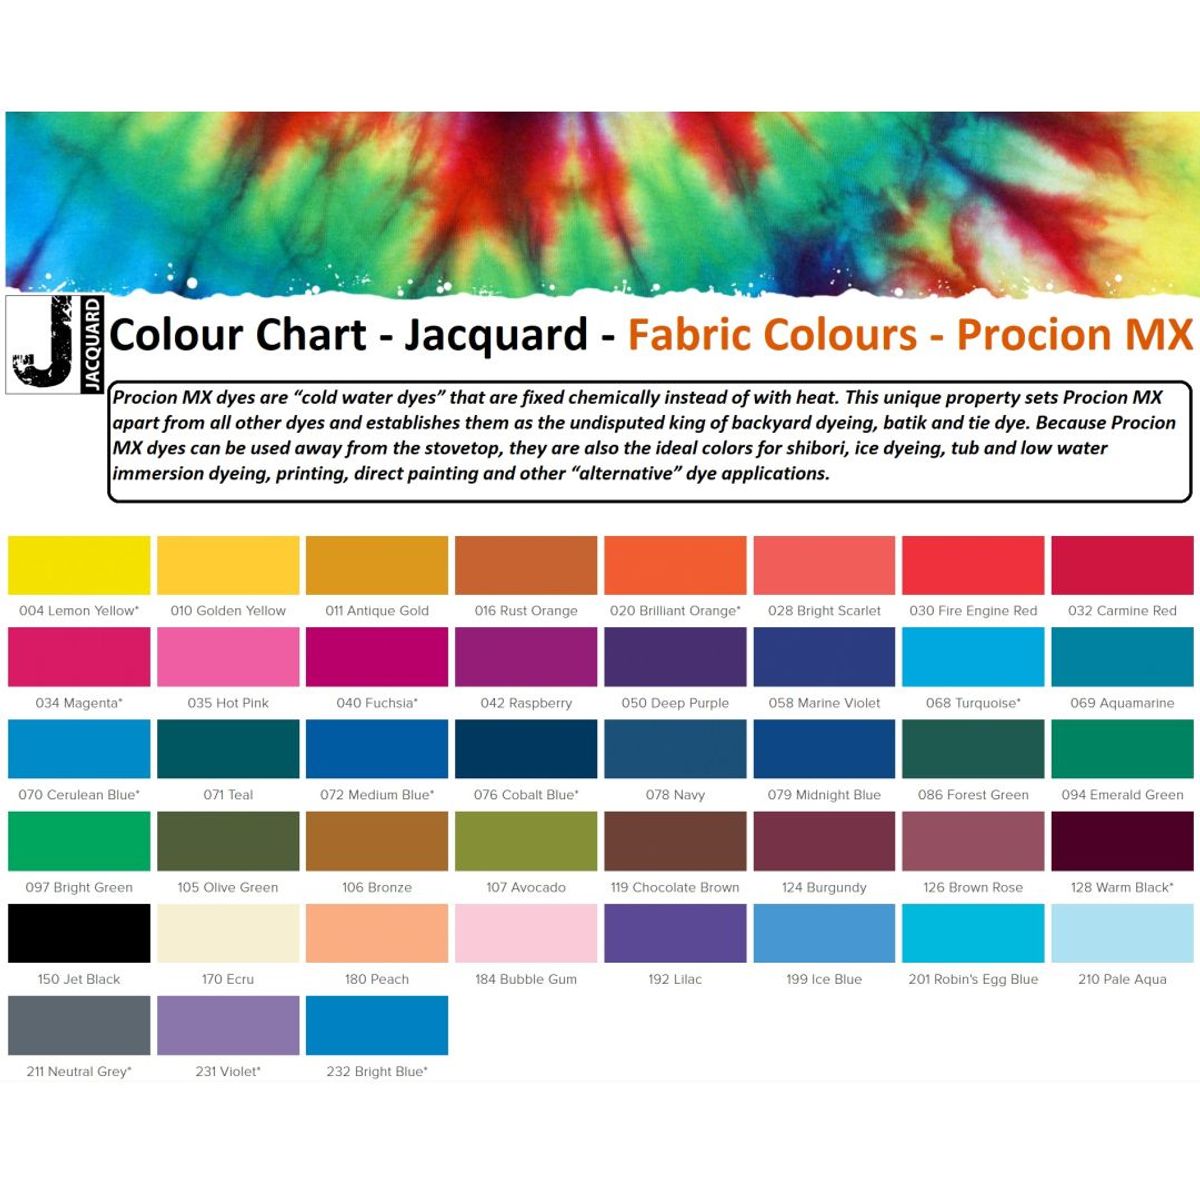 Jacquard - Procion MX Dye - Fabric Textile - Neutral Grey 211